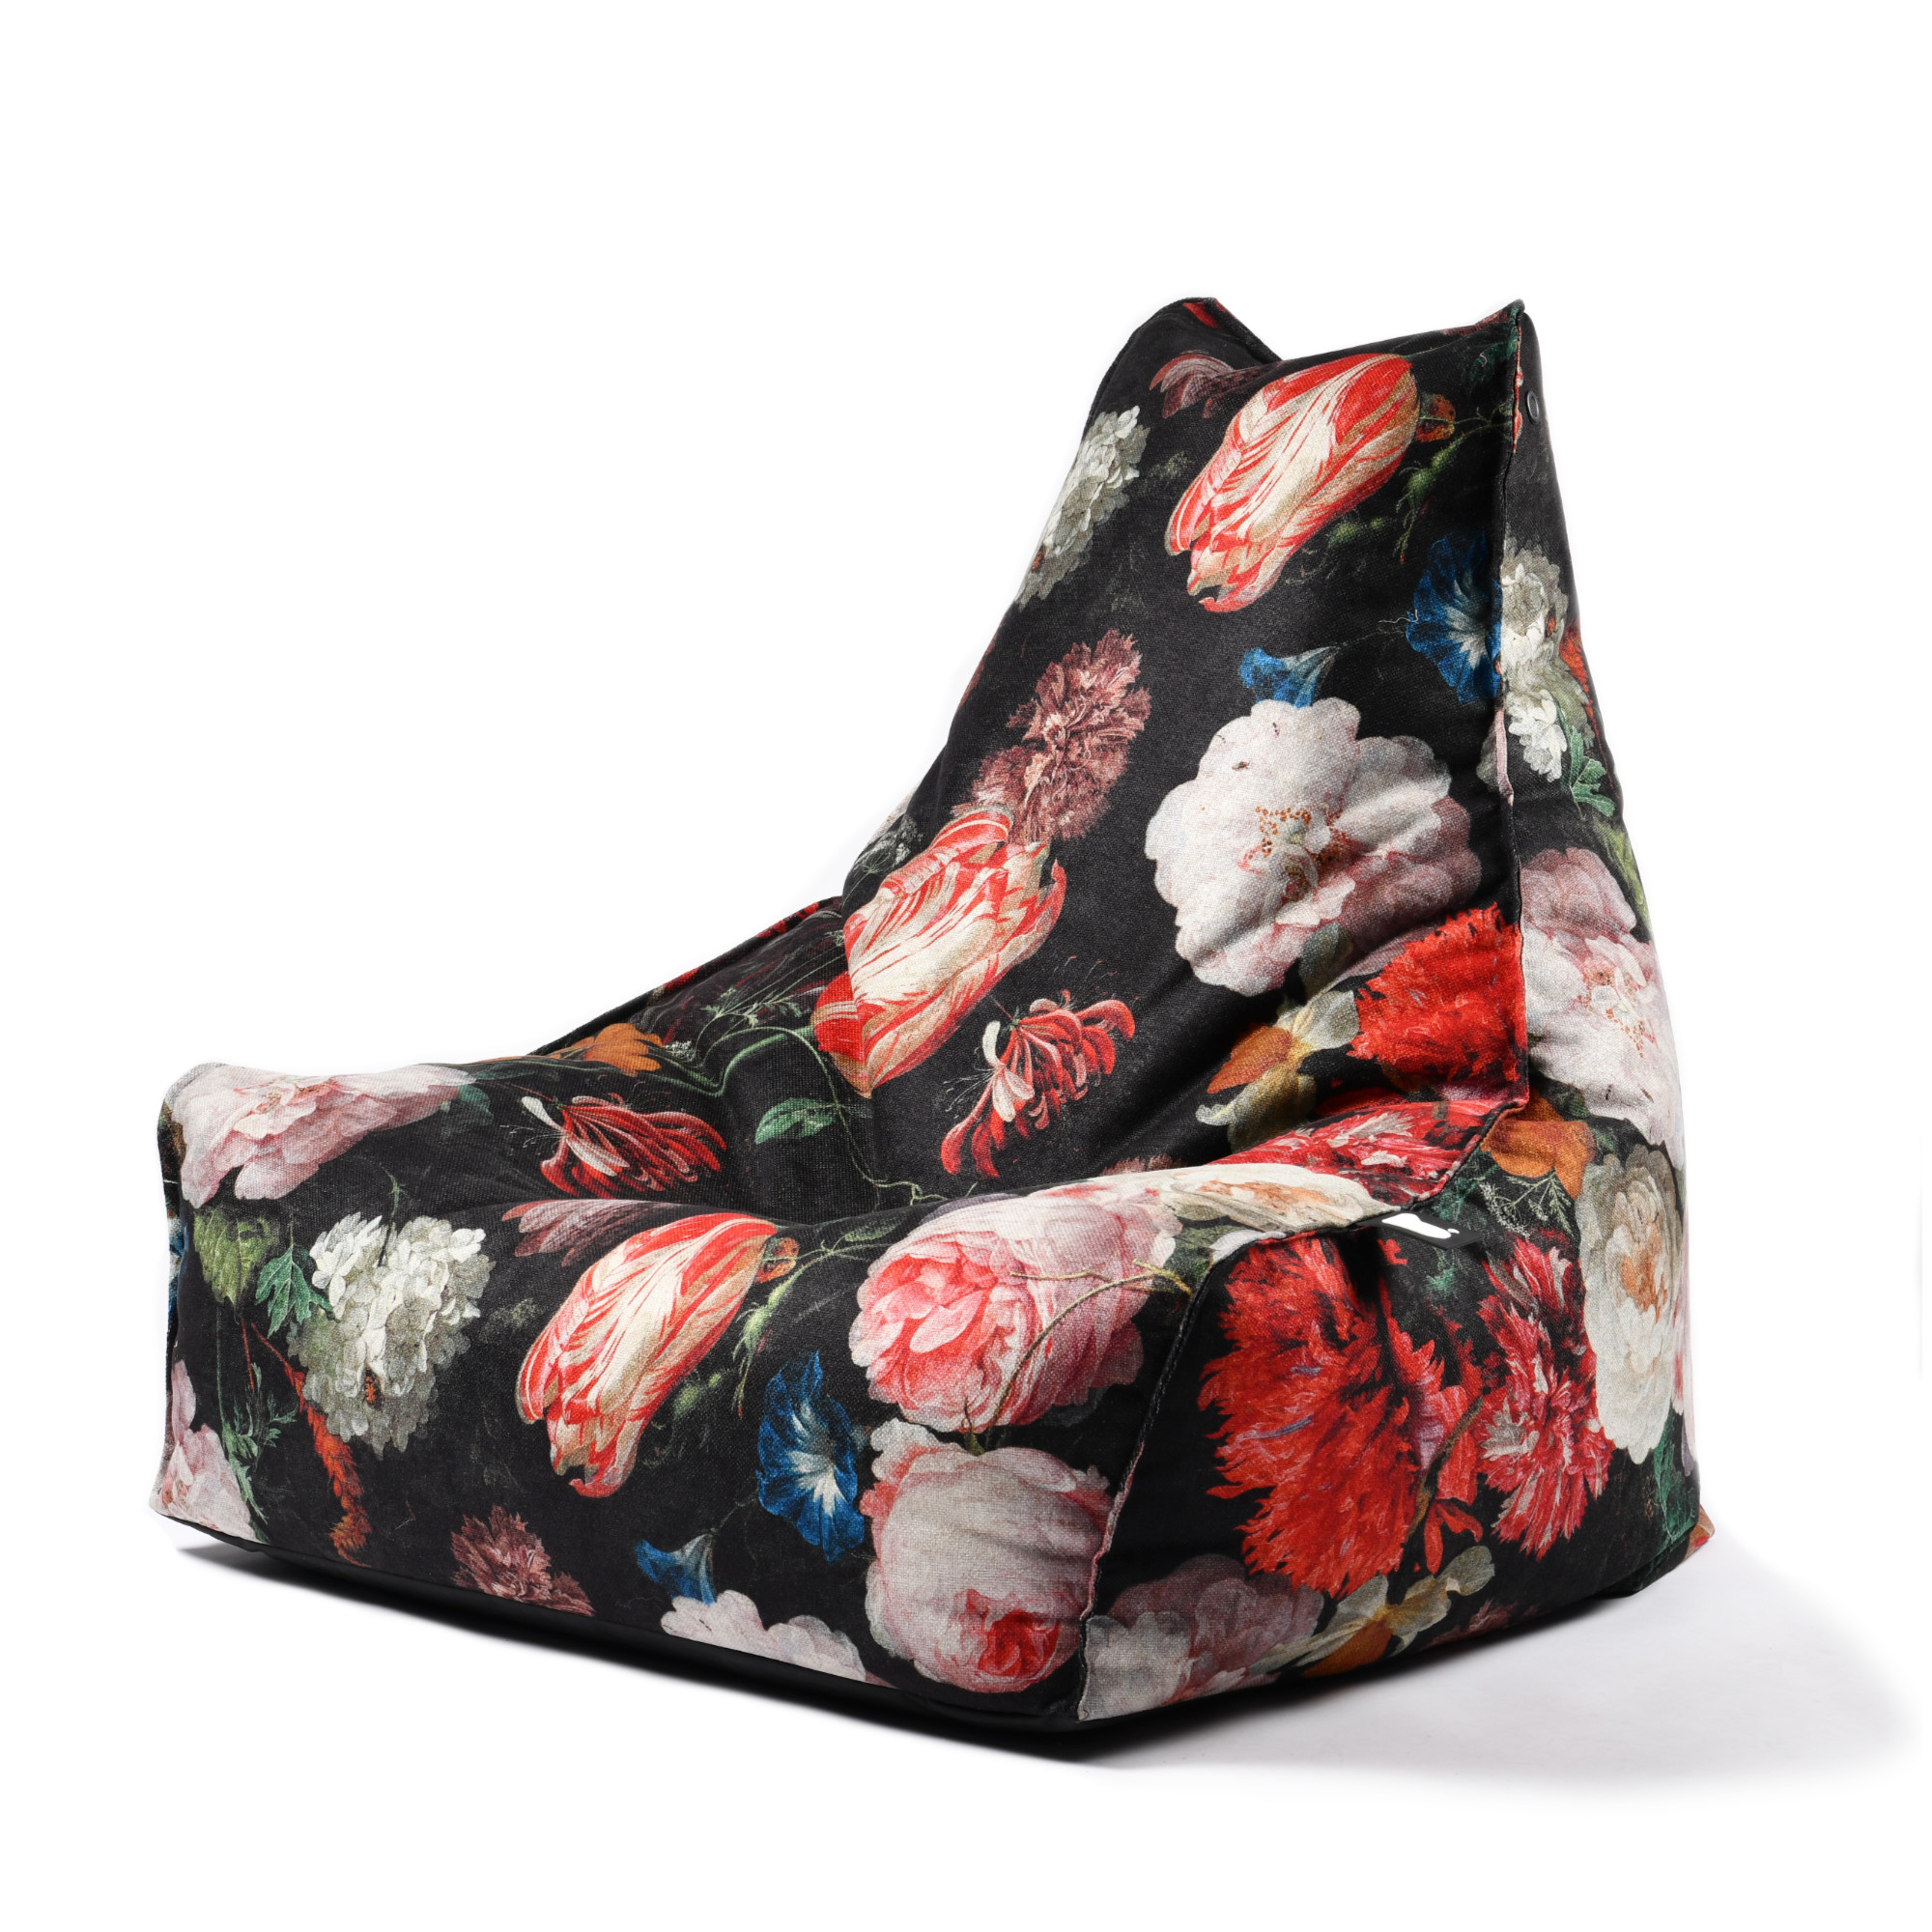 Sitzsack mit floralem Muster von Extreme Lounging